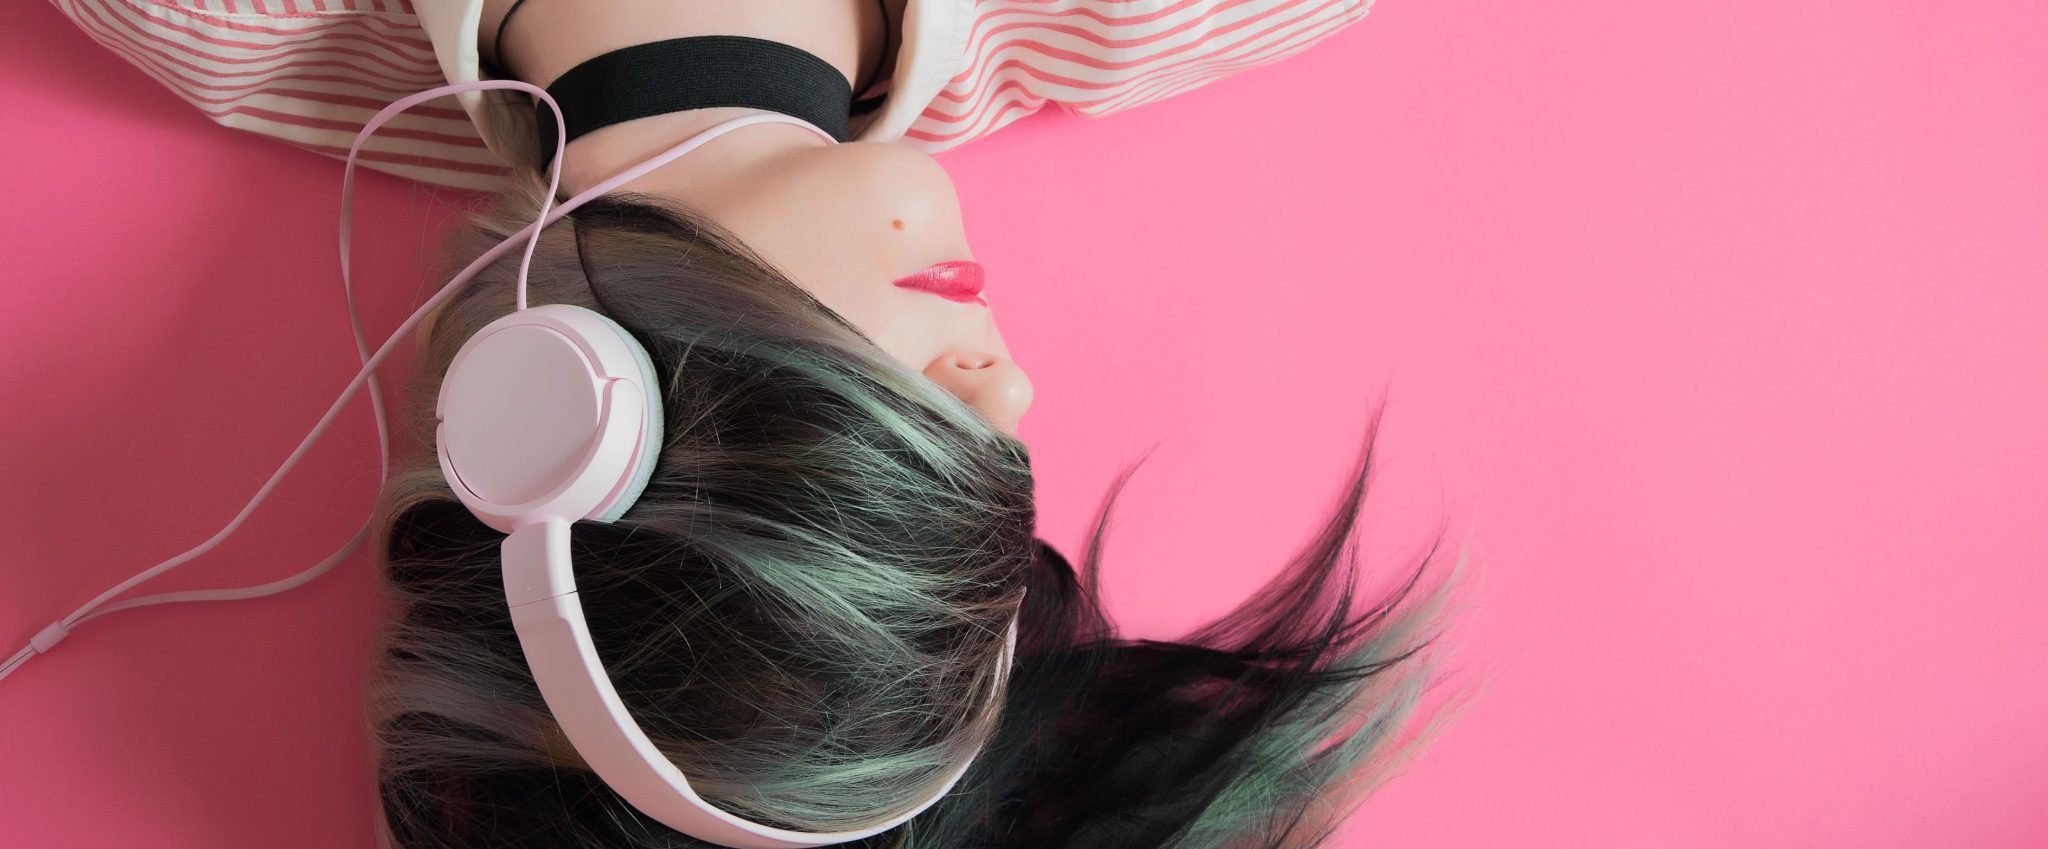 Girl With Headphones | Kycker Articles